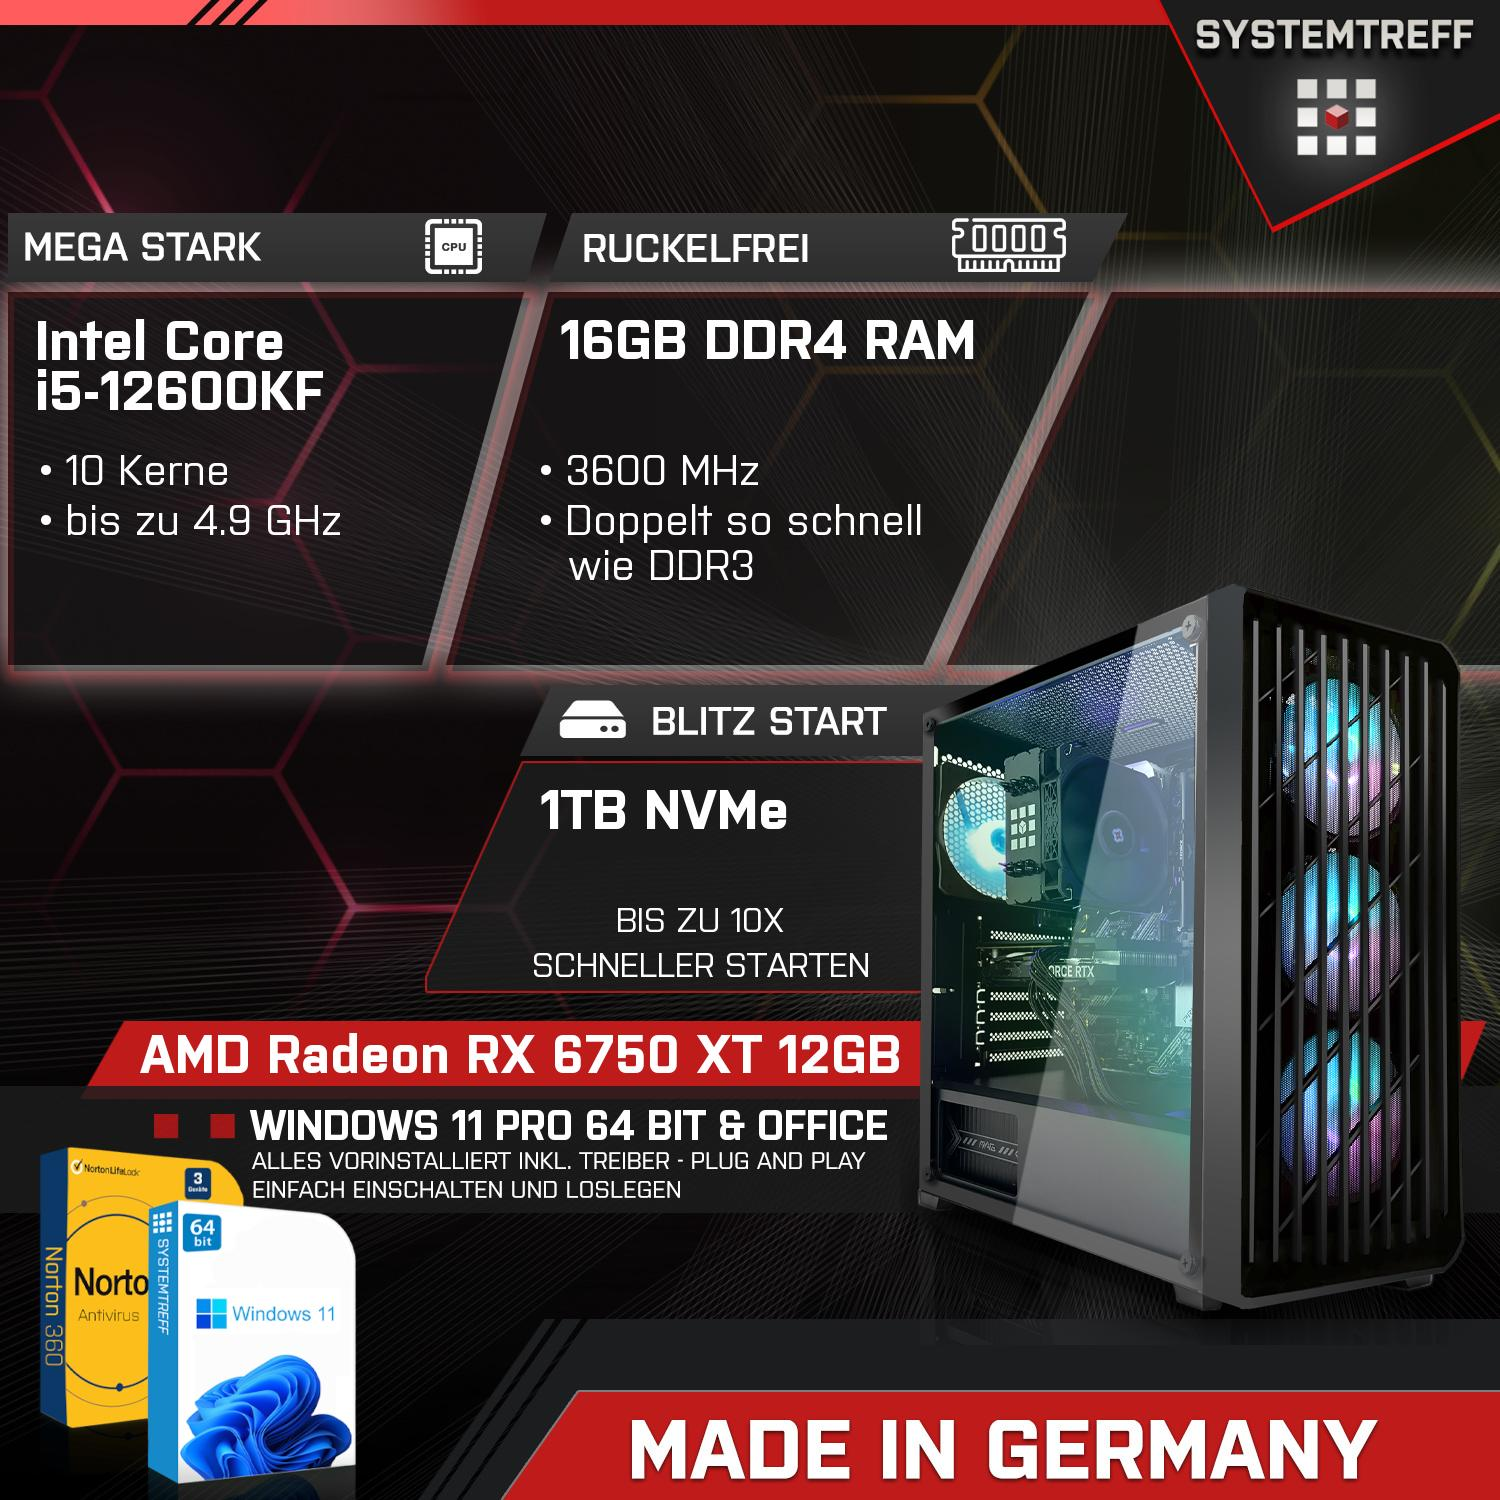 AMD Radeon™ Windows RX PC 16 i5 1000 Intel® Pro, 6750 GB RAM, Gaming 11 Prozessor, SYSTEMTREFF GB i5-12600KF, mit Core Core™ Gaming Pro Intel XT mSSD,